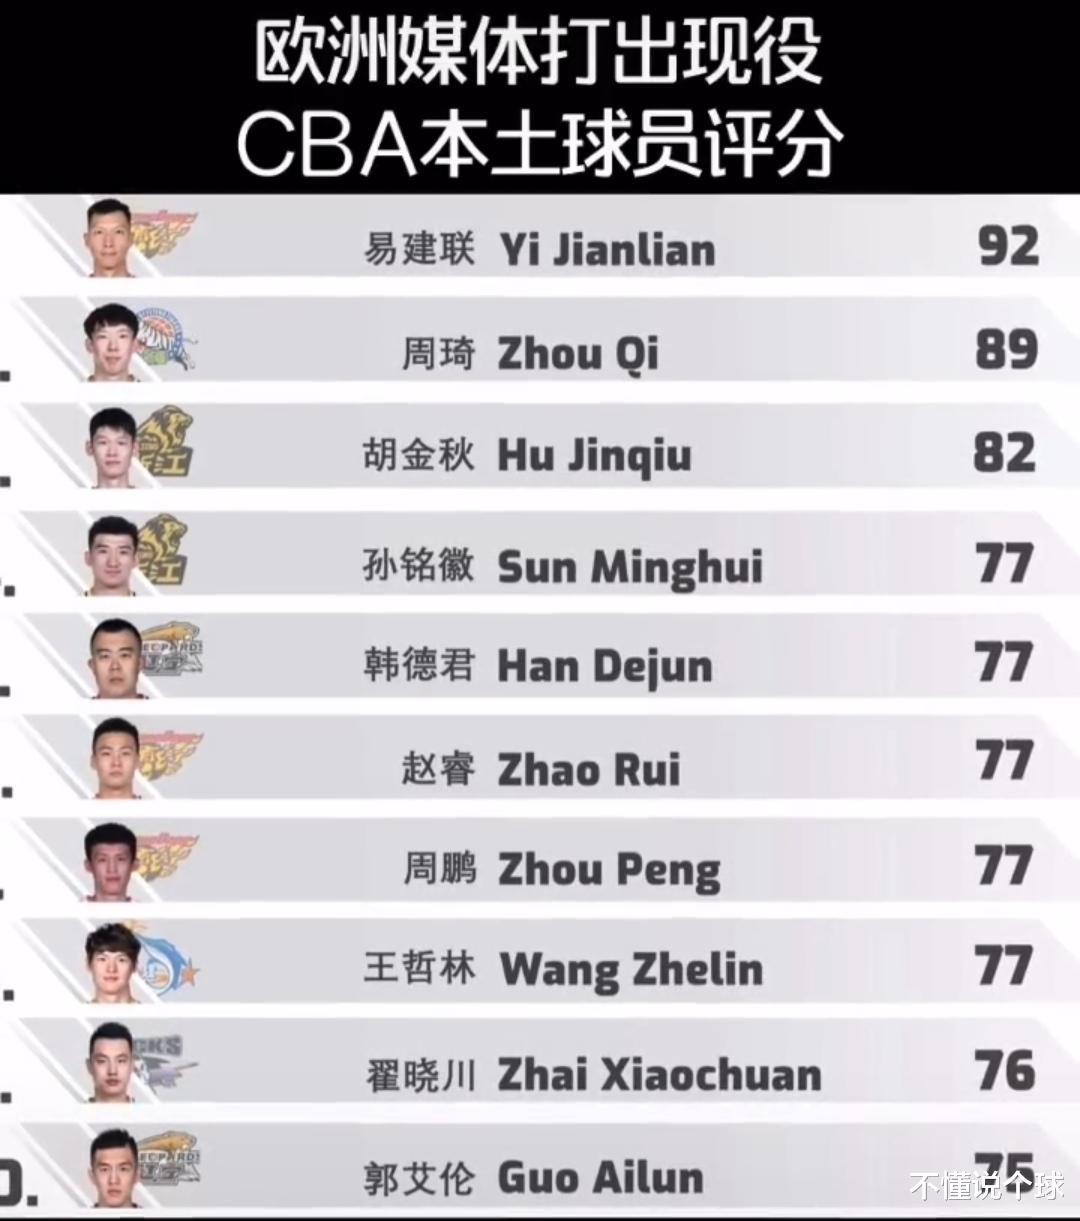 CBA本土球员评分，郭艾伦排第十不如孙铭徽和赵睿，球迷表示不服